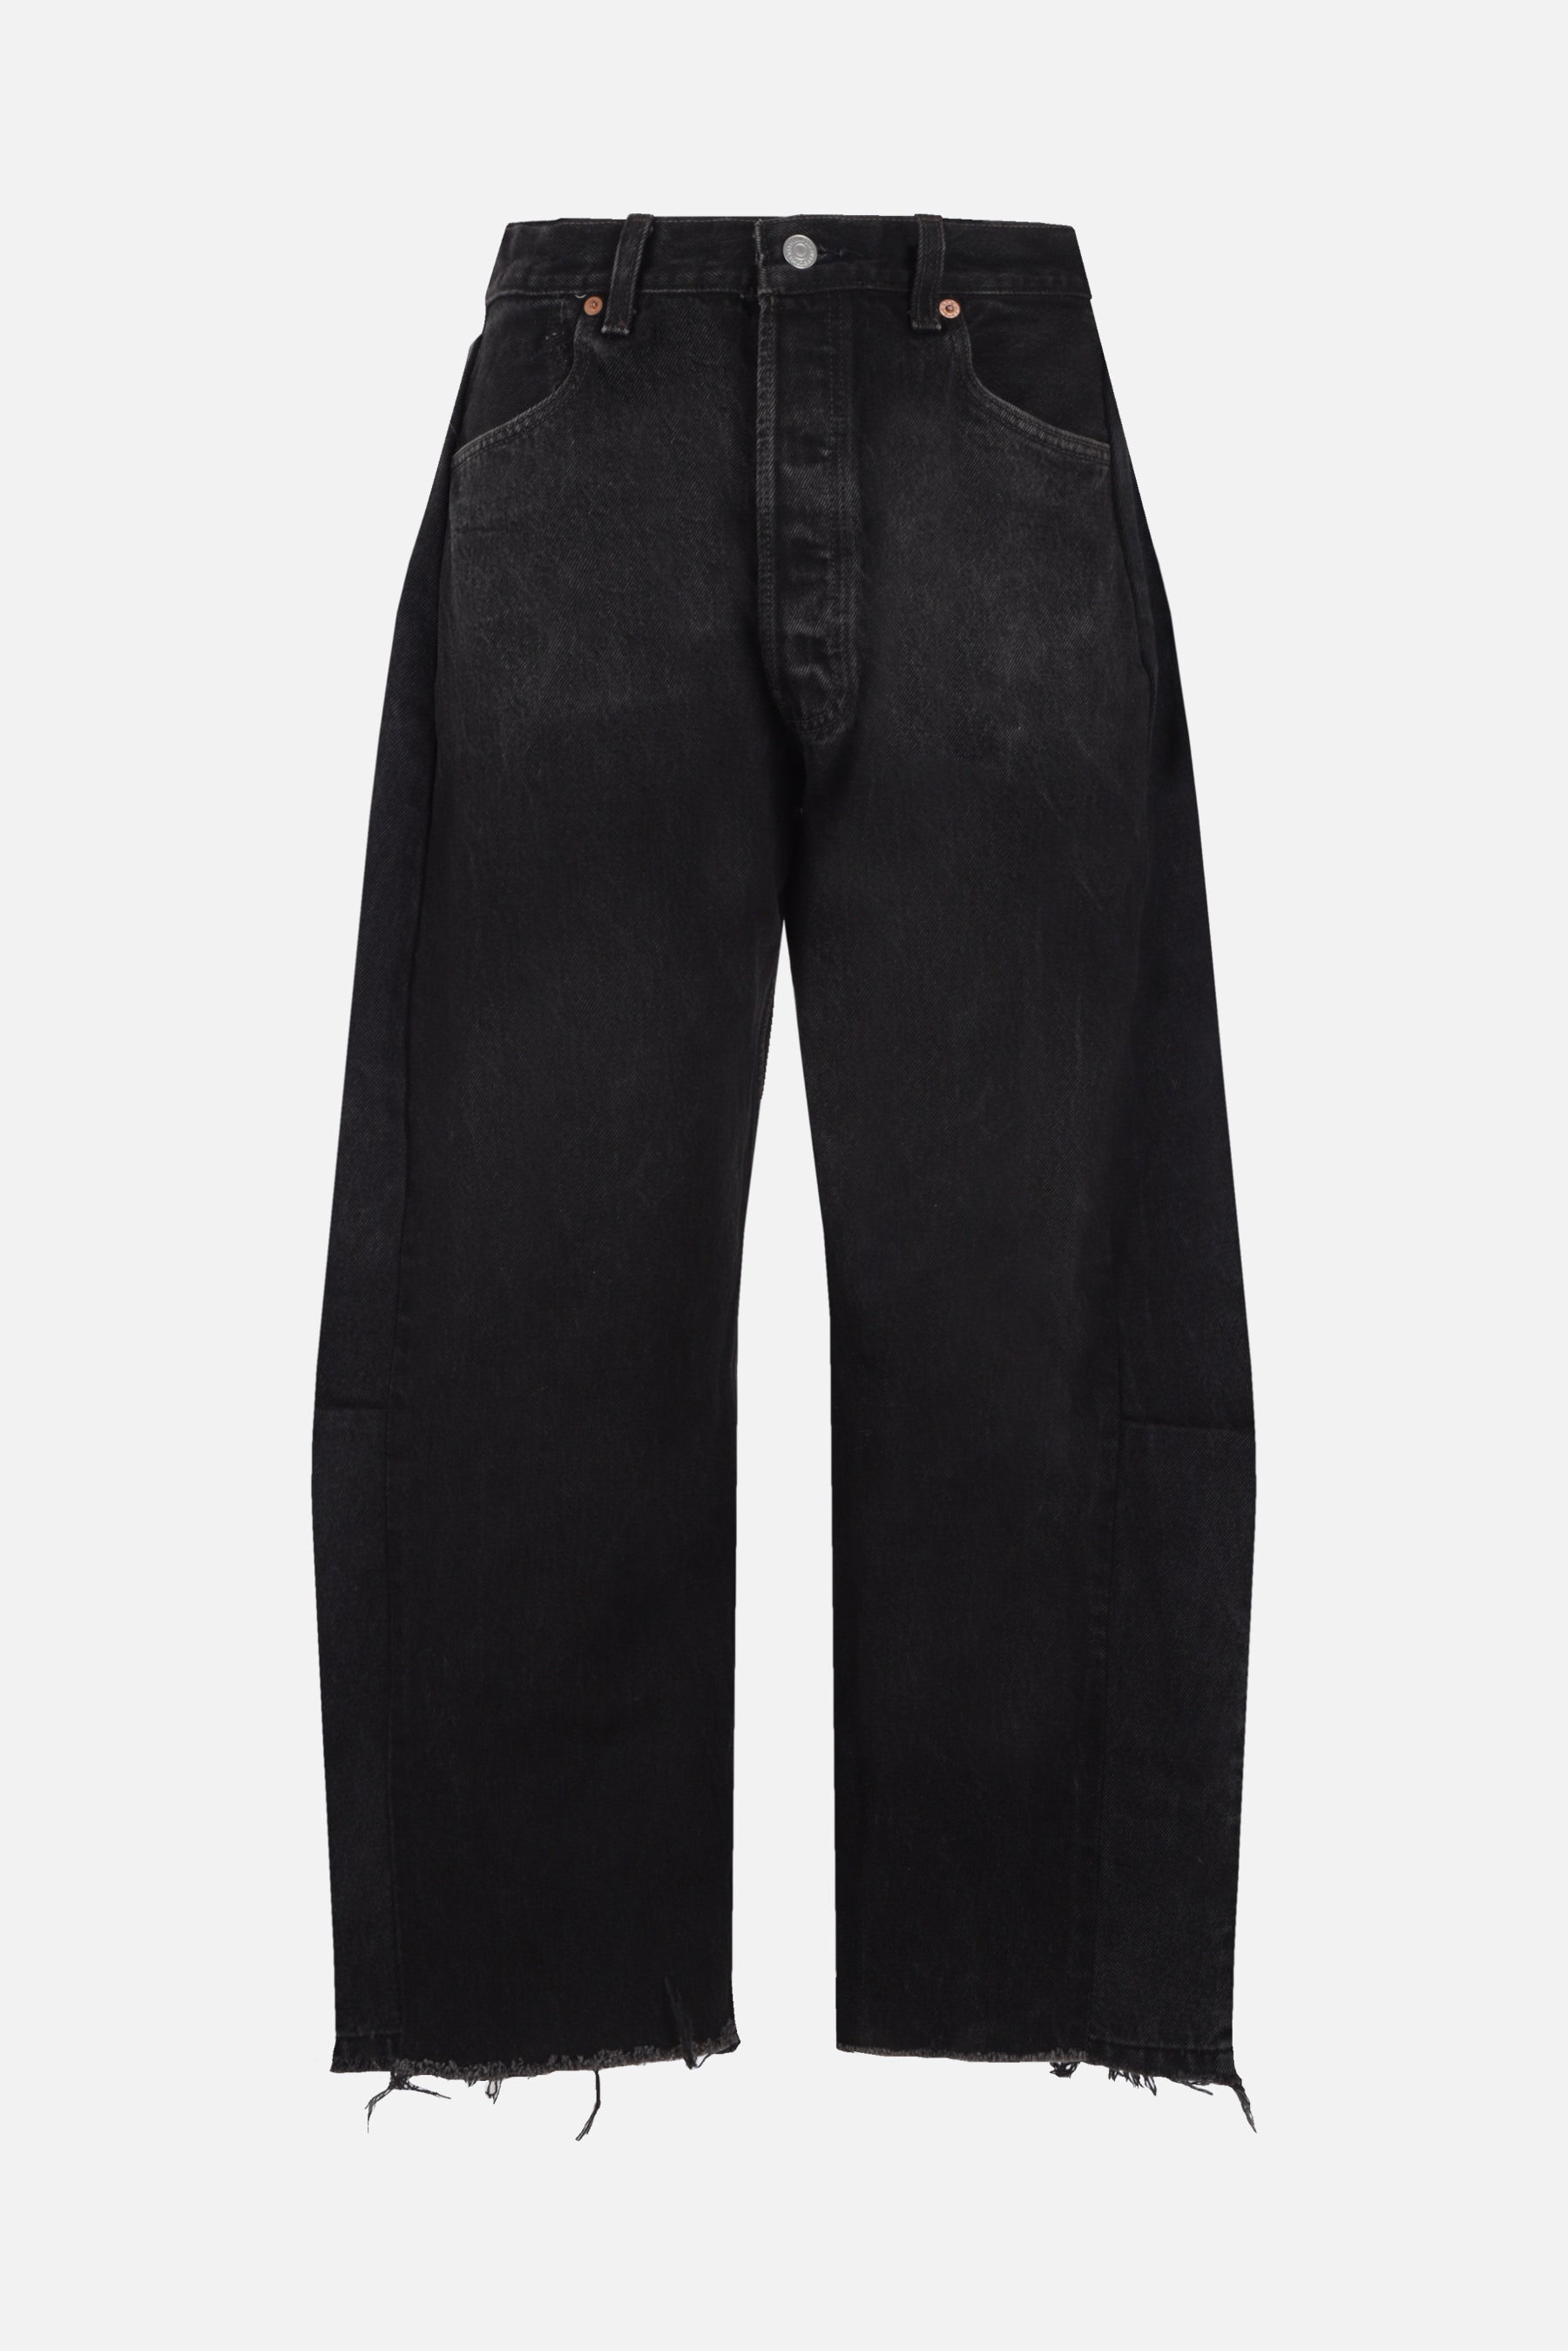 jeans Lasso in denim vintage rigenerato